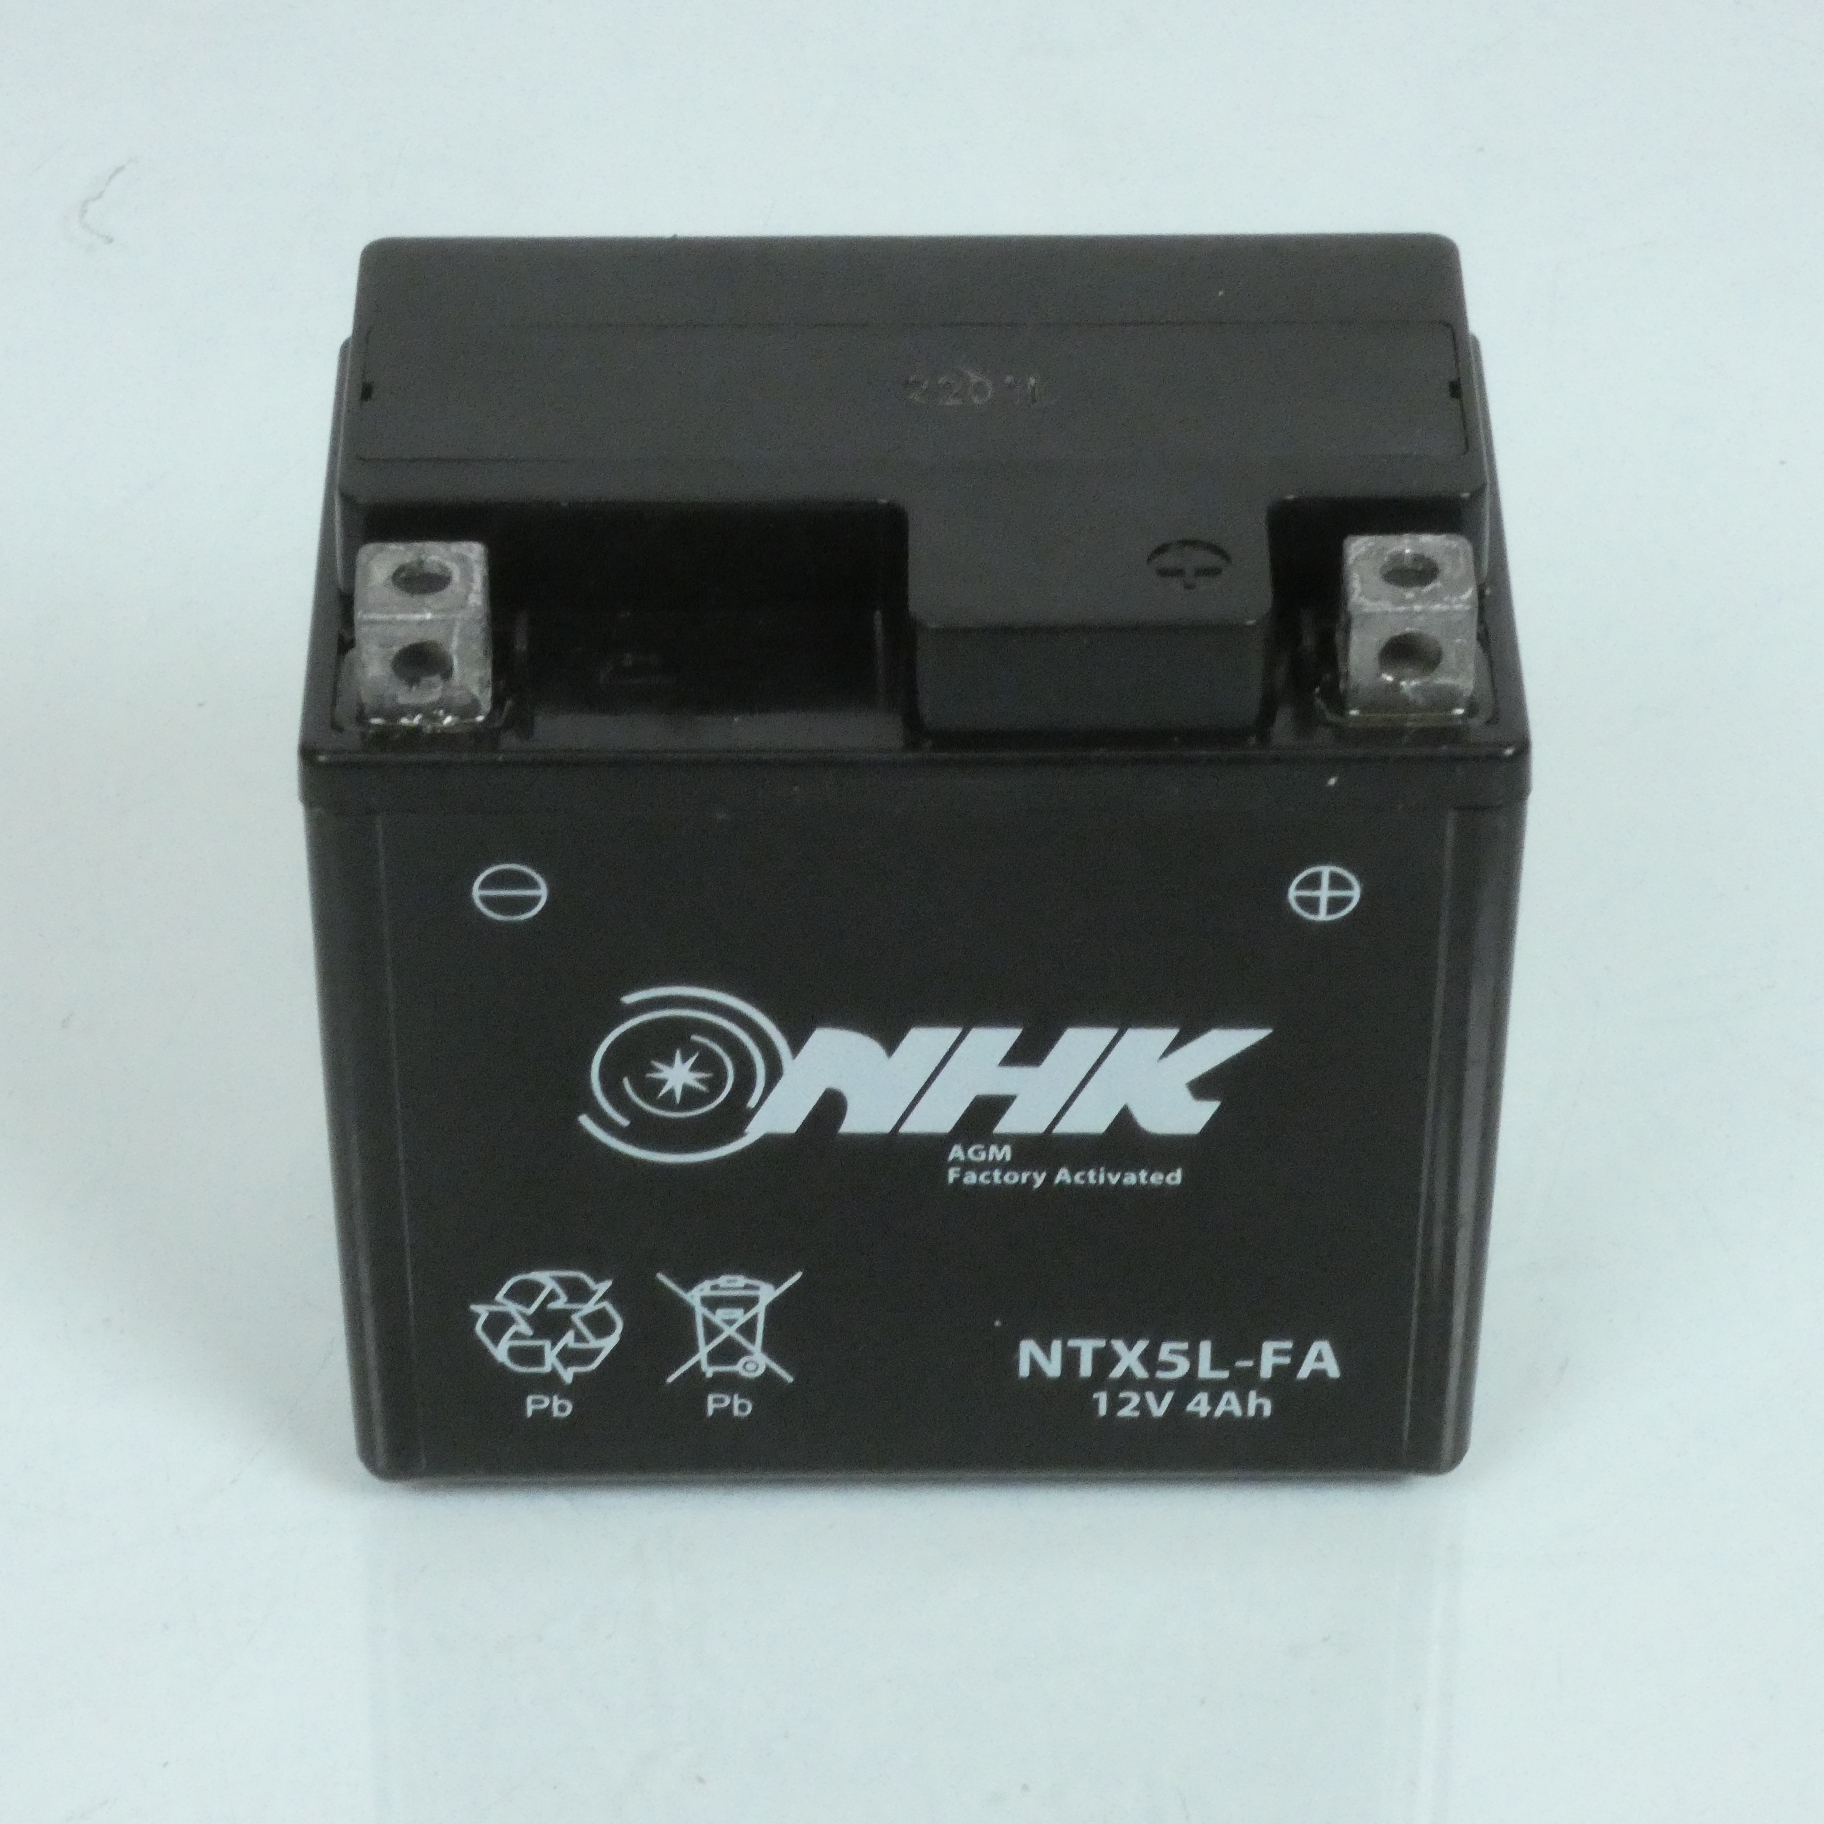 Batterie NHK pour Moto Rieju 50 RRX Neuf